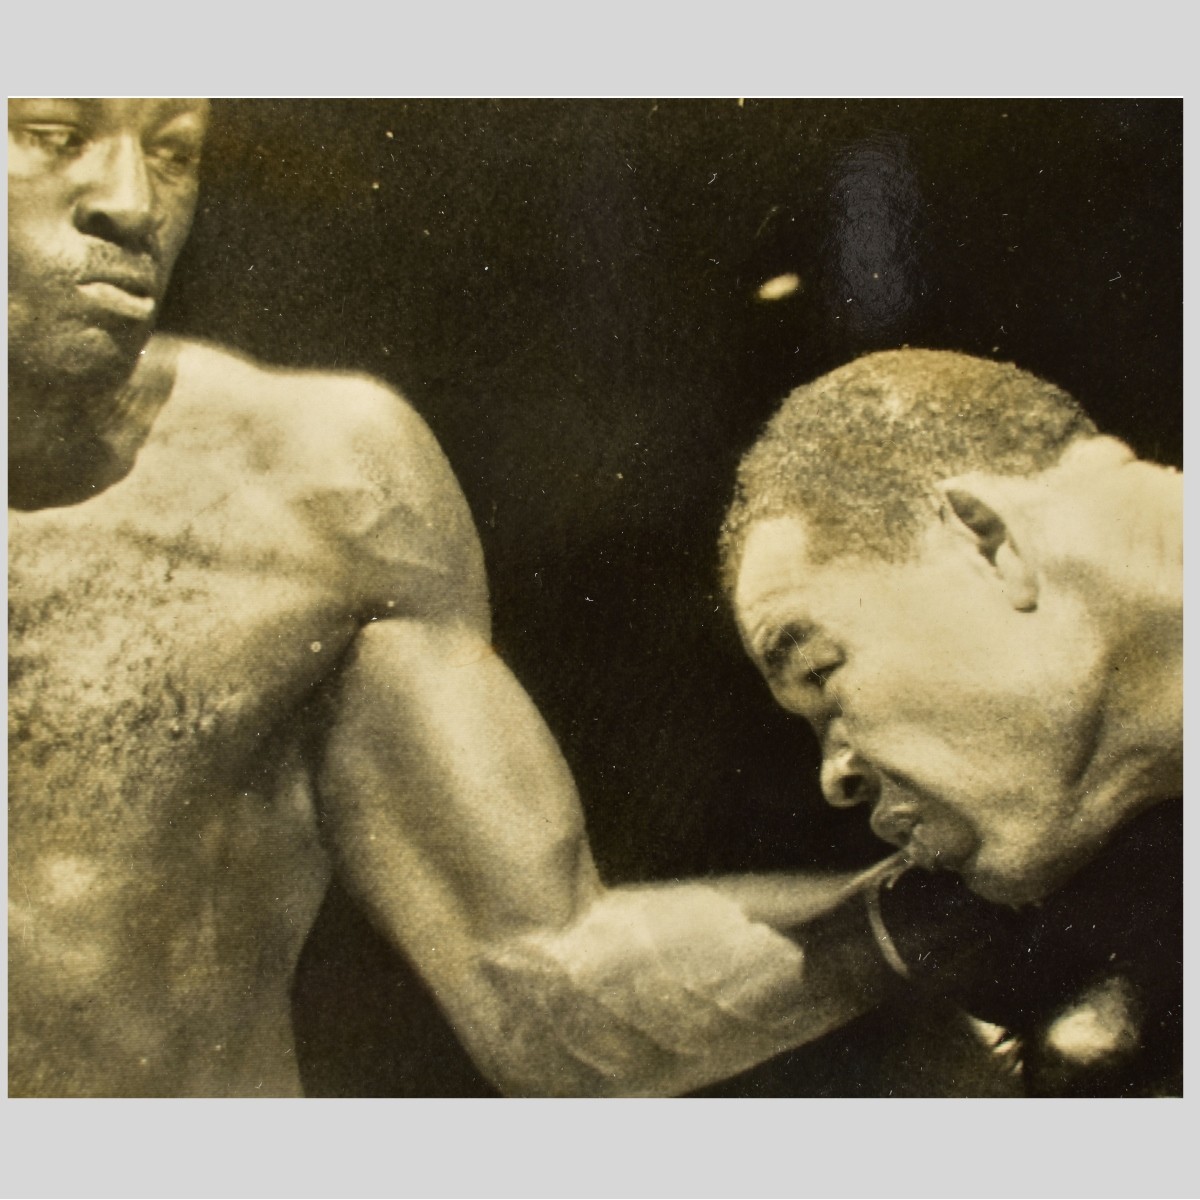 Four Boxing Photograph Memorabilia